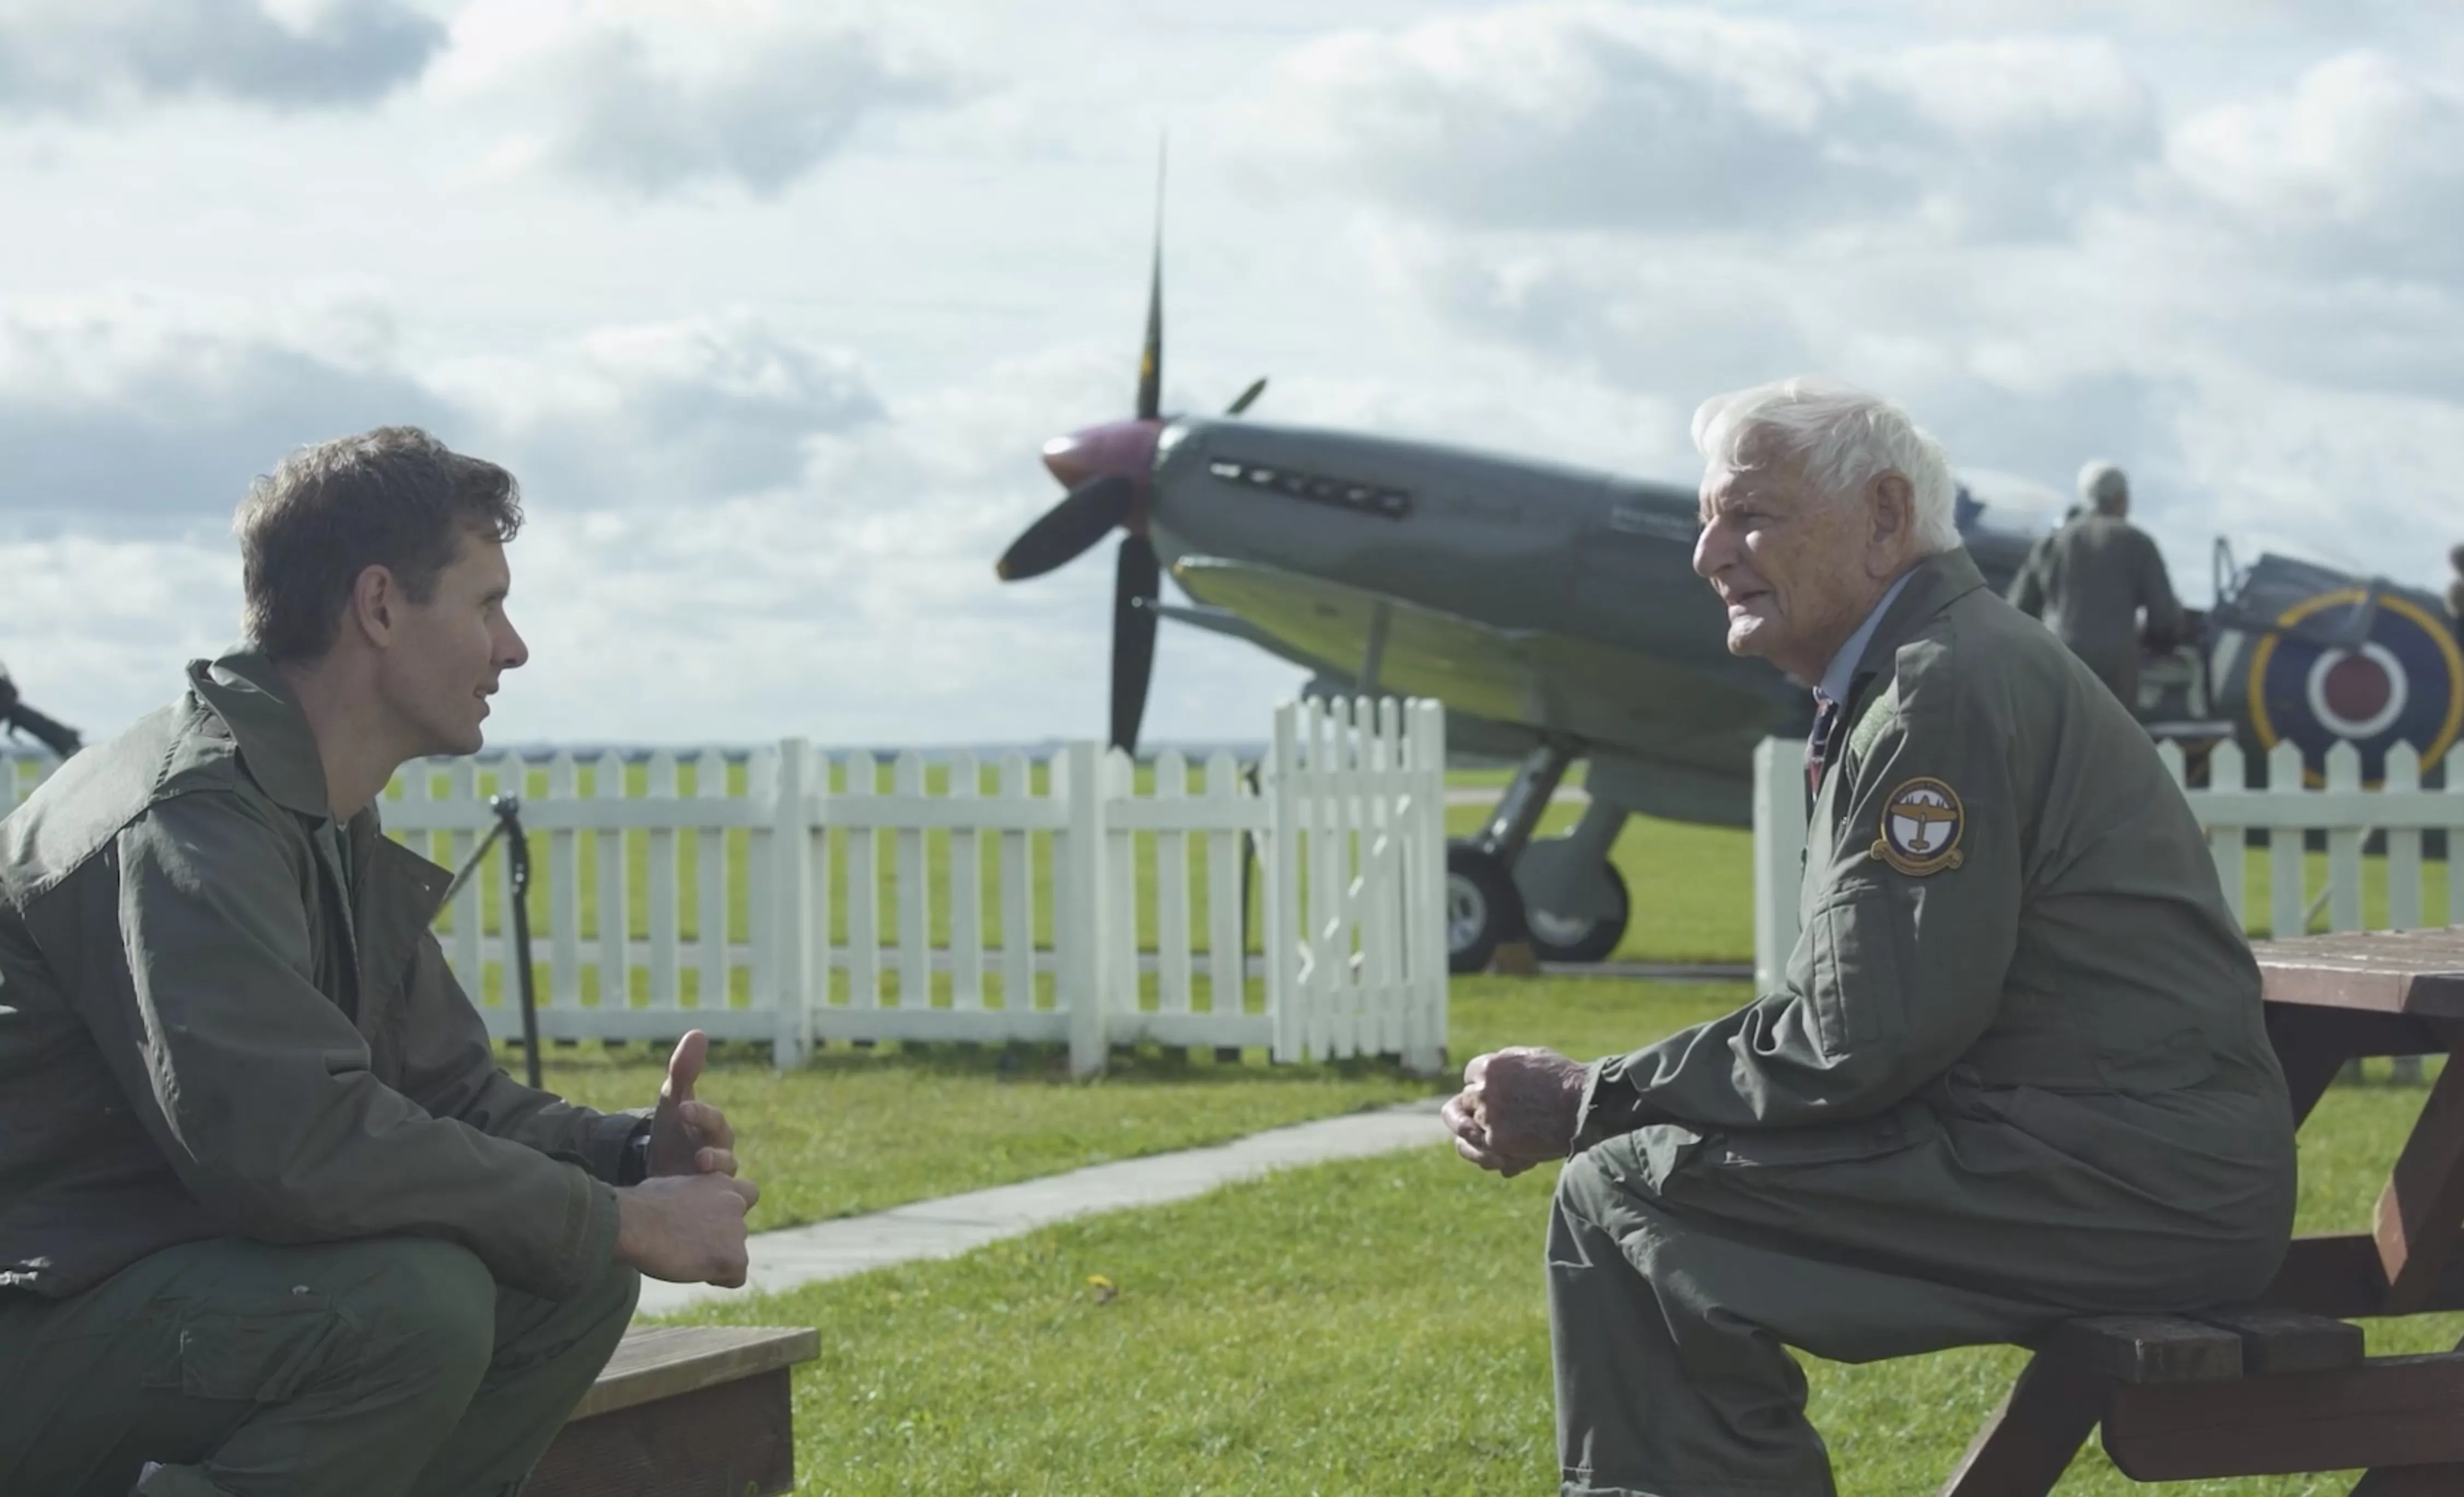 Capturing Hawker Typhoon veteran's dream flight. Bernard Gardiner with Sam Worthington-Leese, who is Founding Trustee of the HTPG